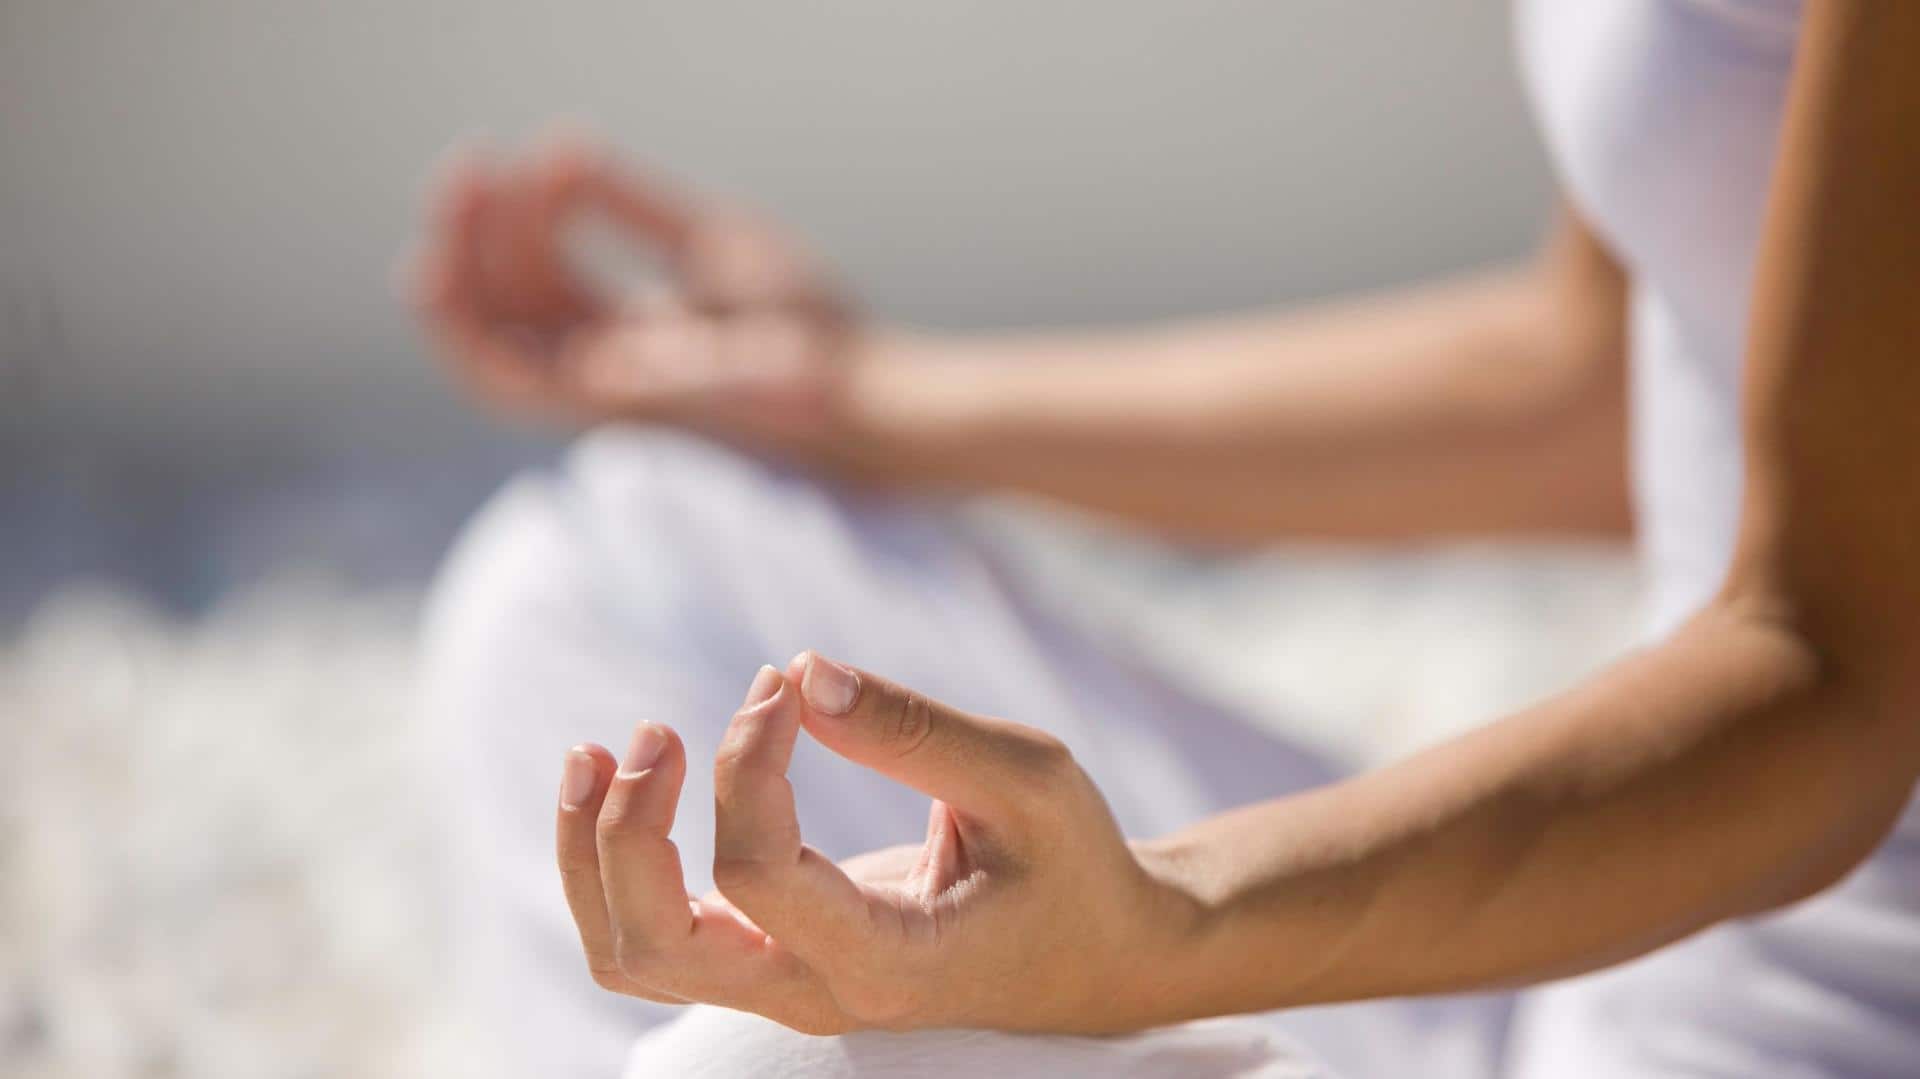 These yoga asanas can improve your thyroid health